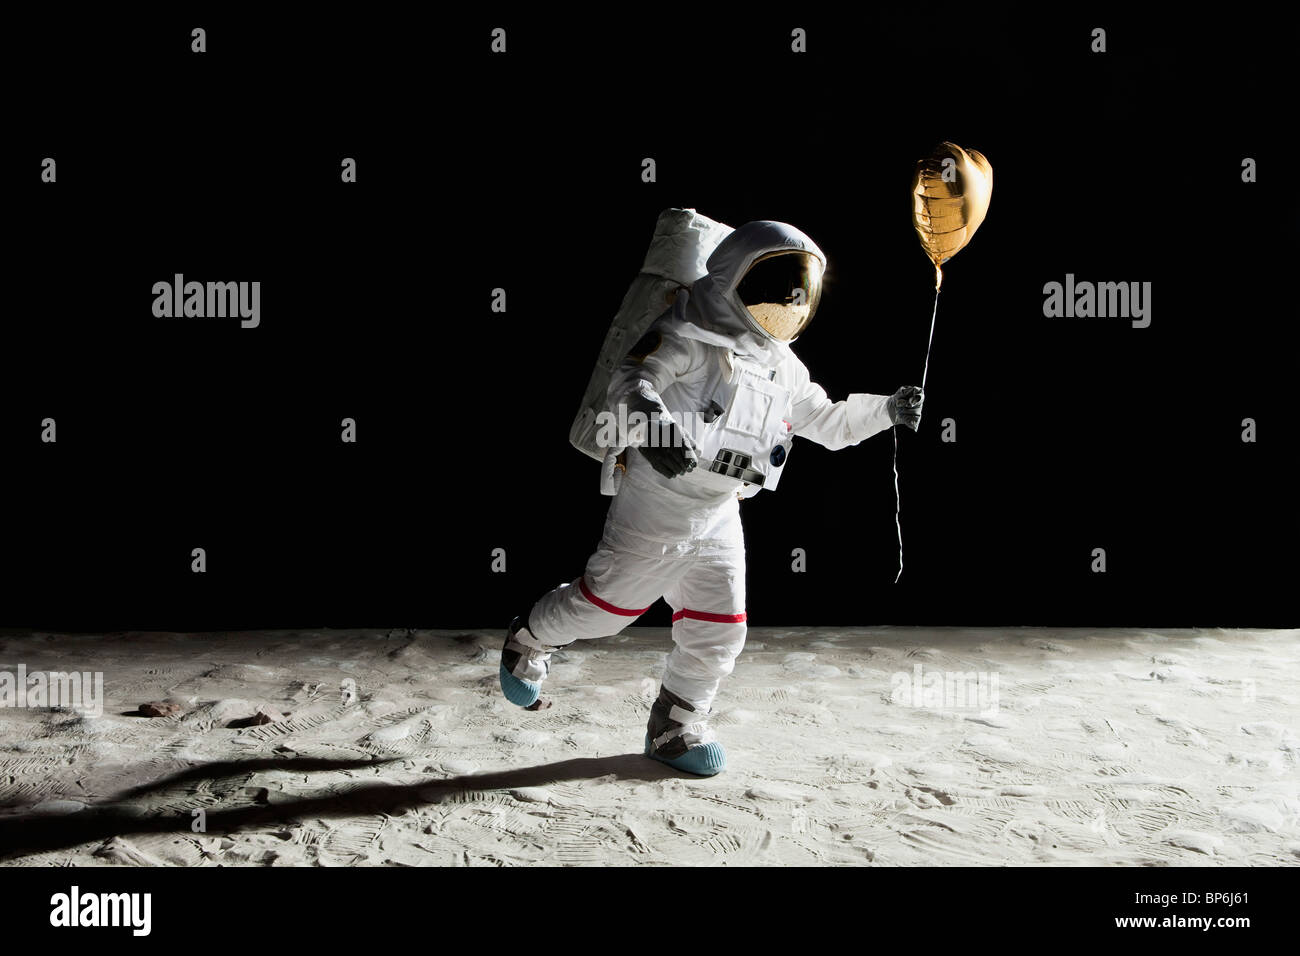 An astronaut on the moon holding a heart shaped helium balloon Stock Photo